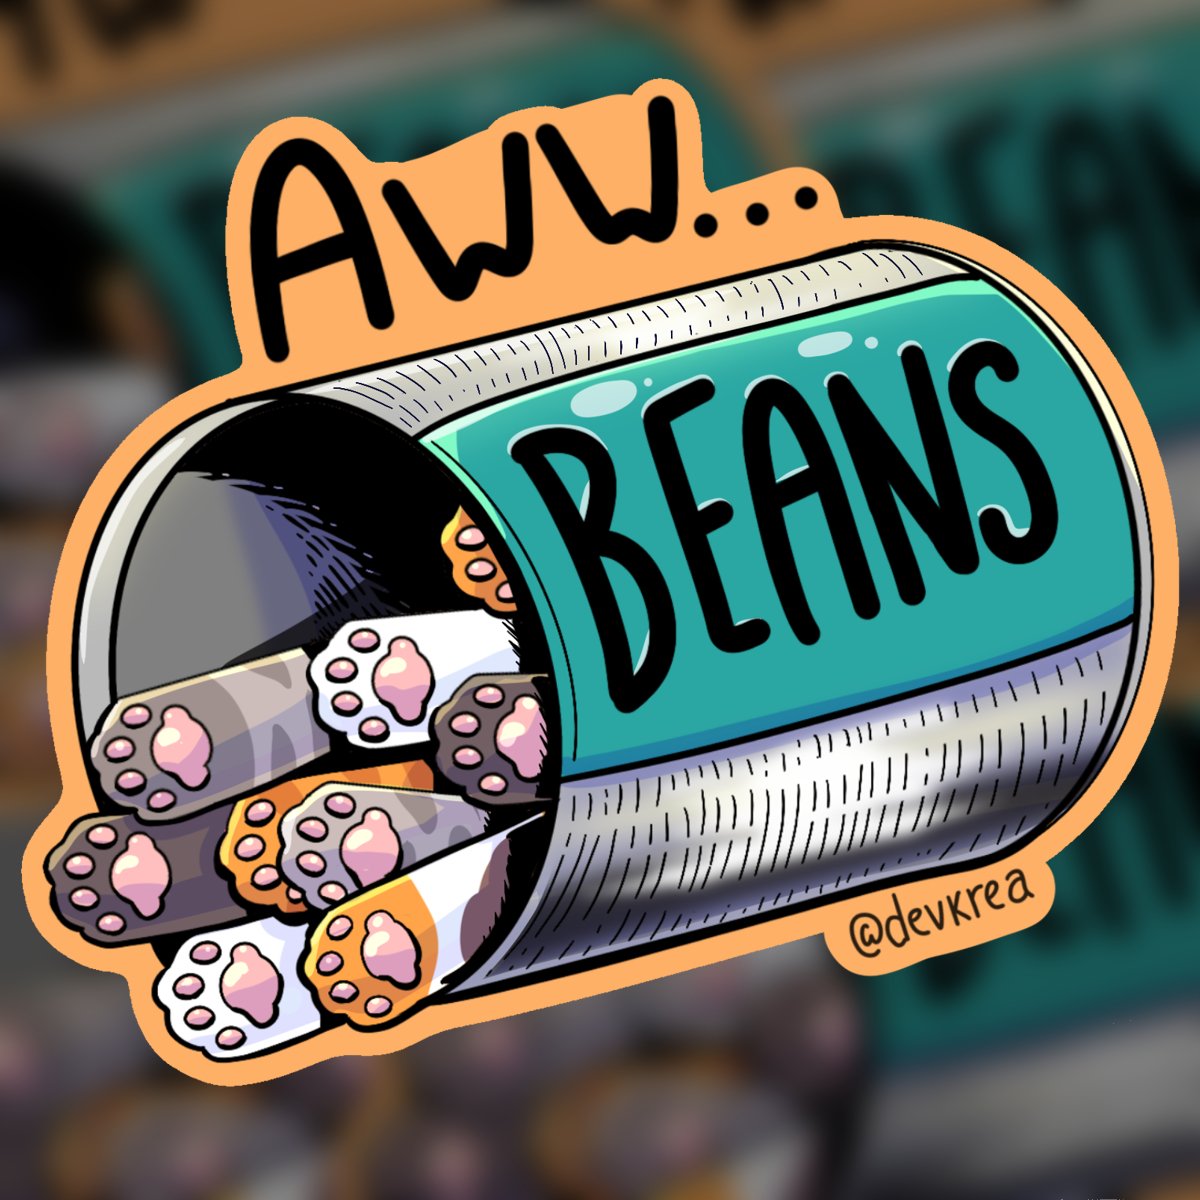 Aww Beans 3" Vinyl Sticker | Deviant Kreations - Deviantkreations